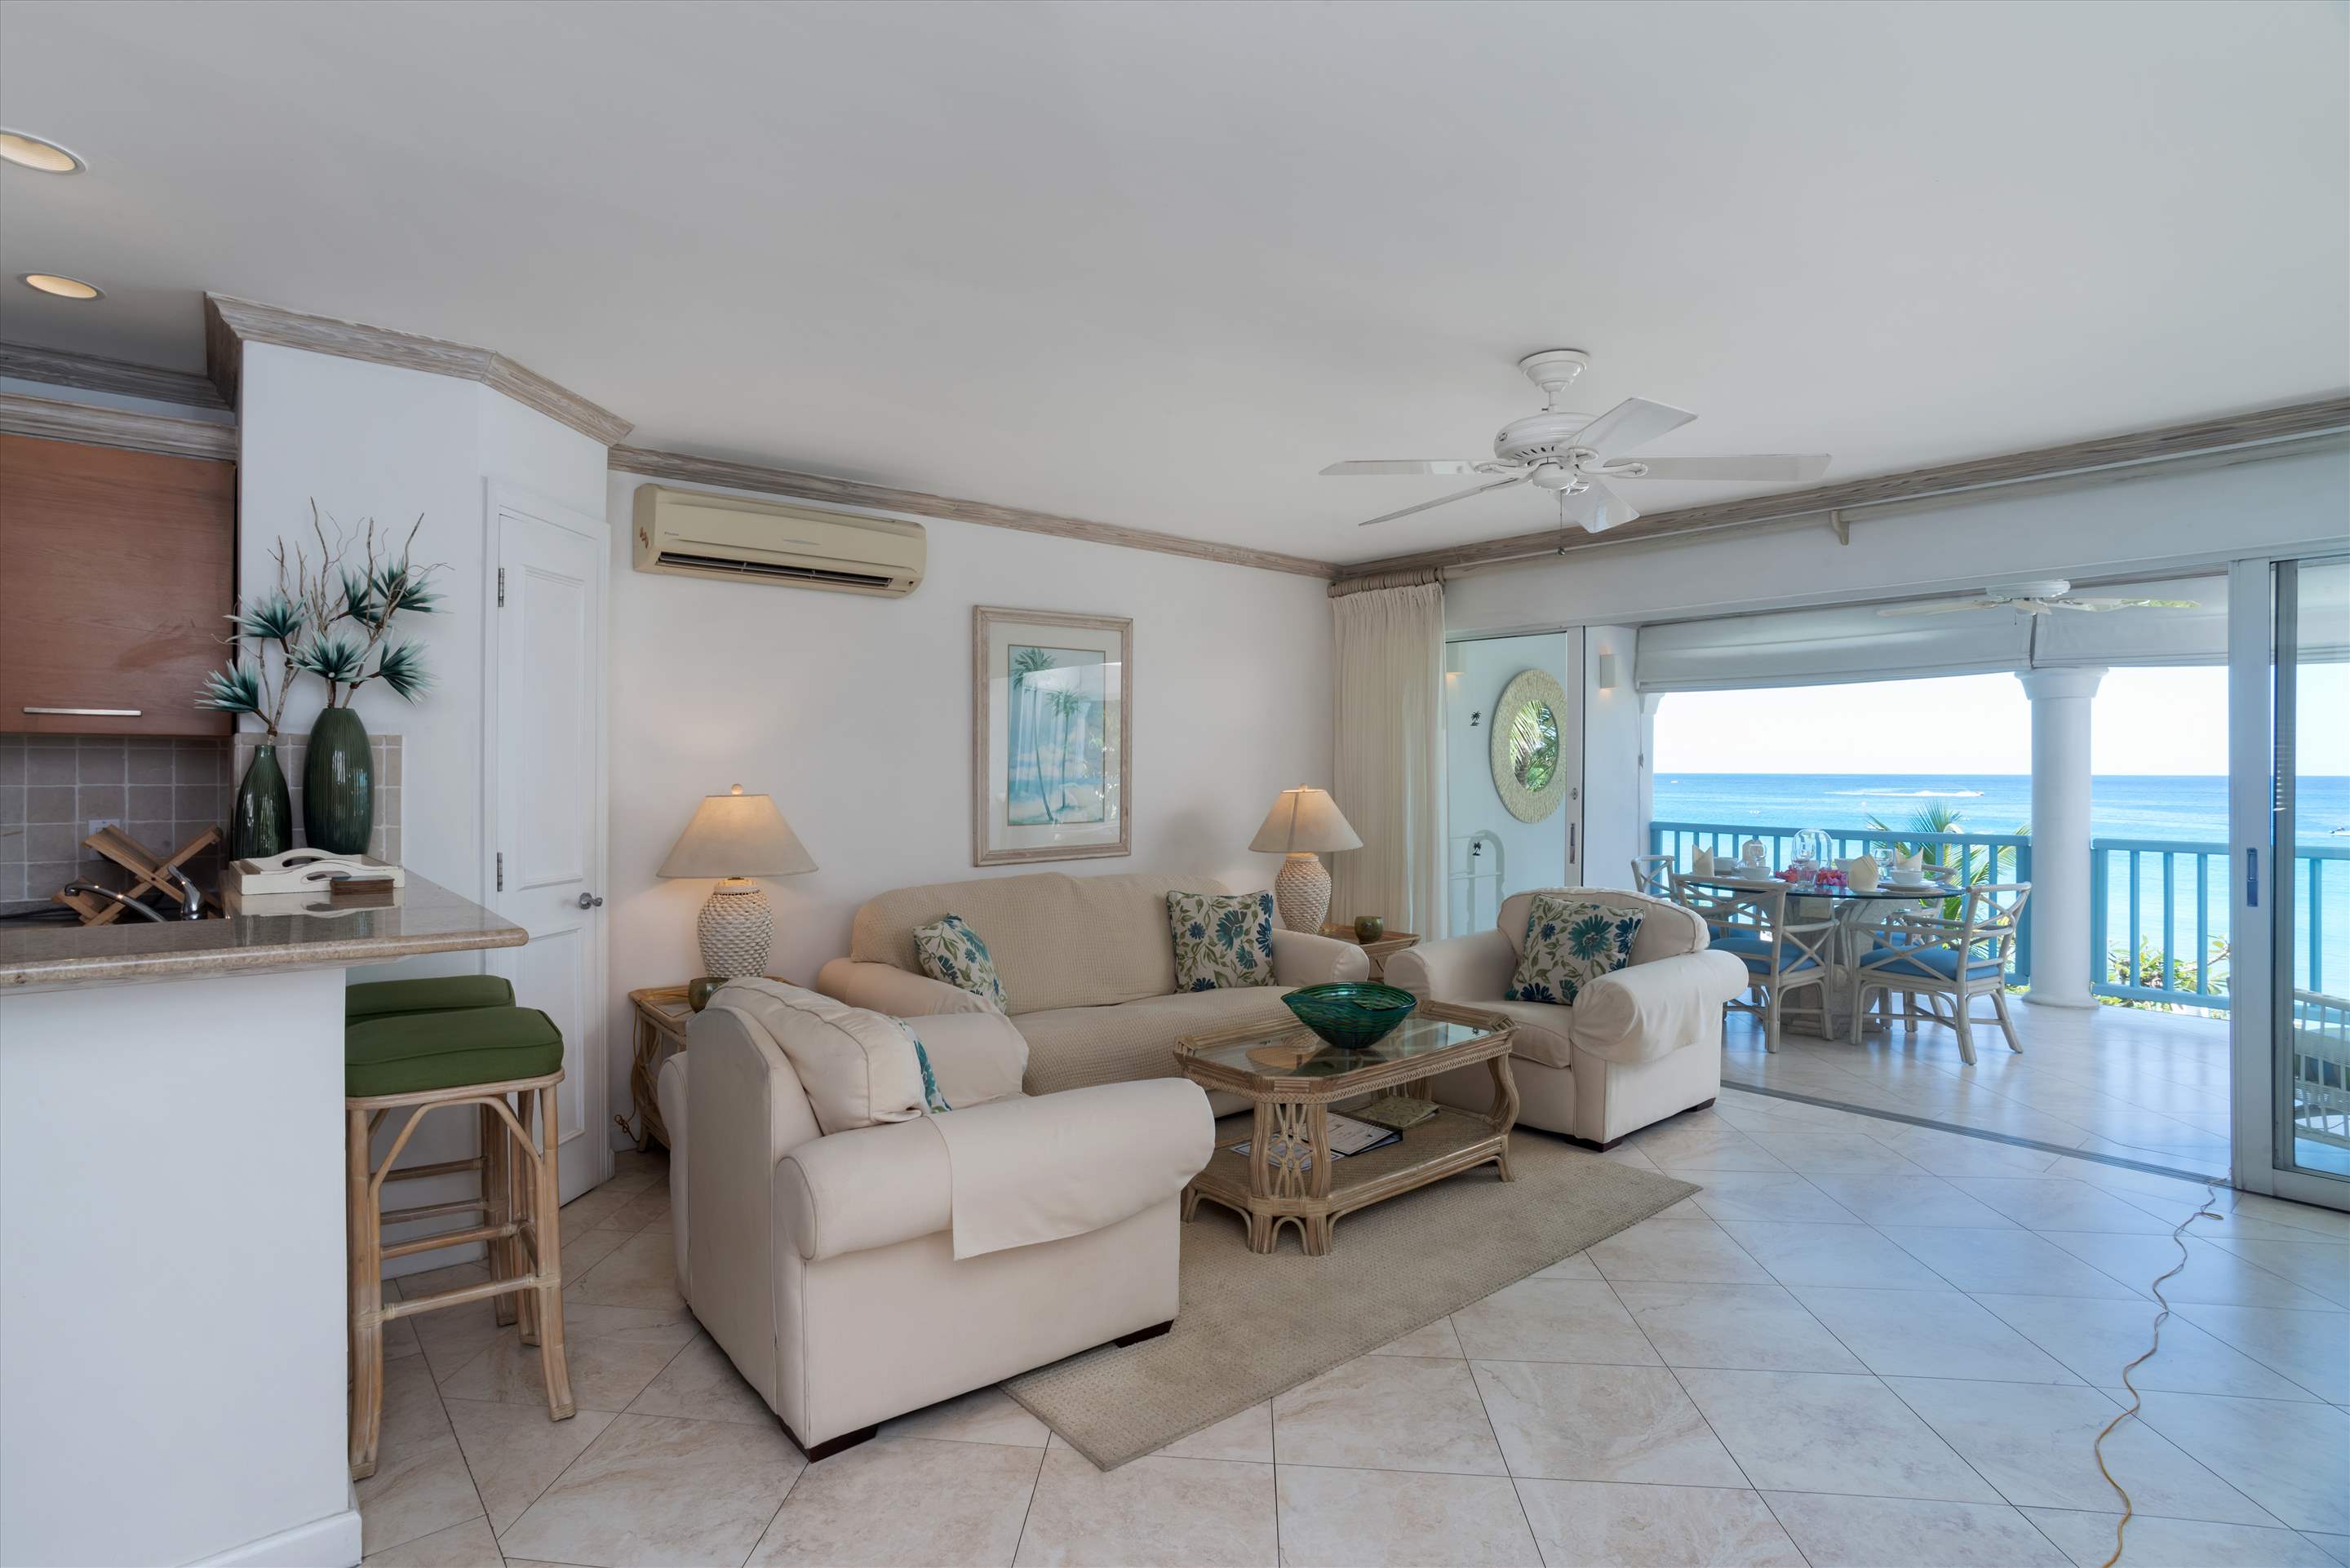 Villas on the Beach 205, 1 bedroom, 1 bedroom apartment in St. James & West Coast, Barbados Photo #5